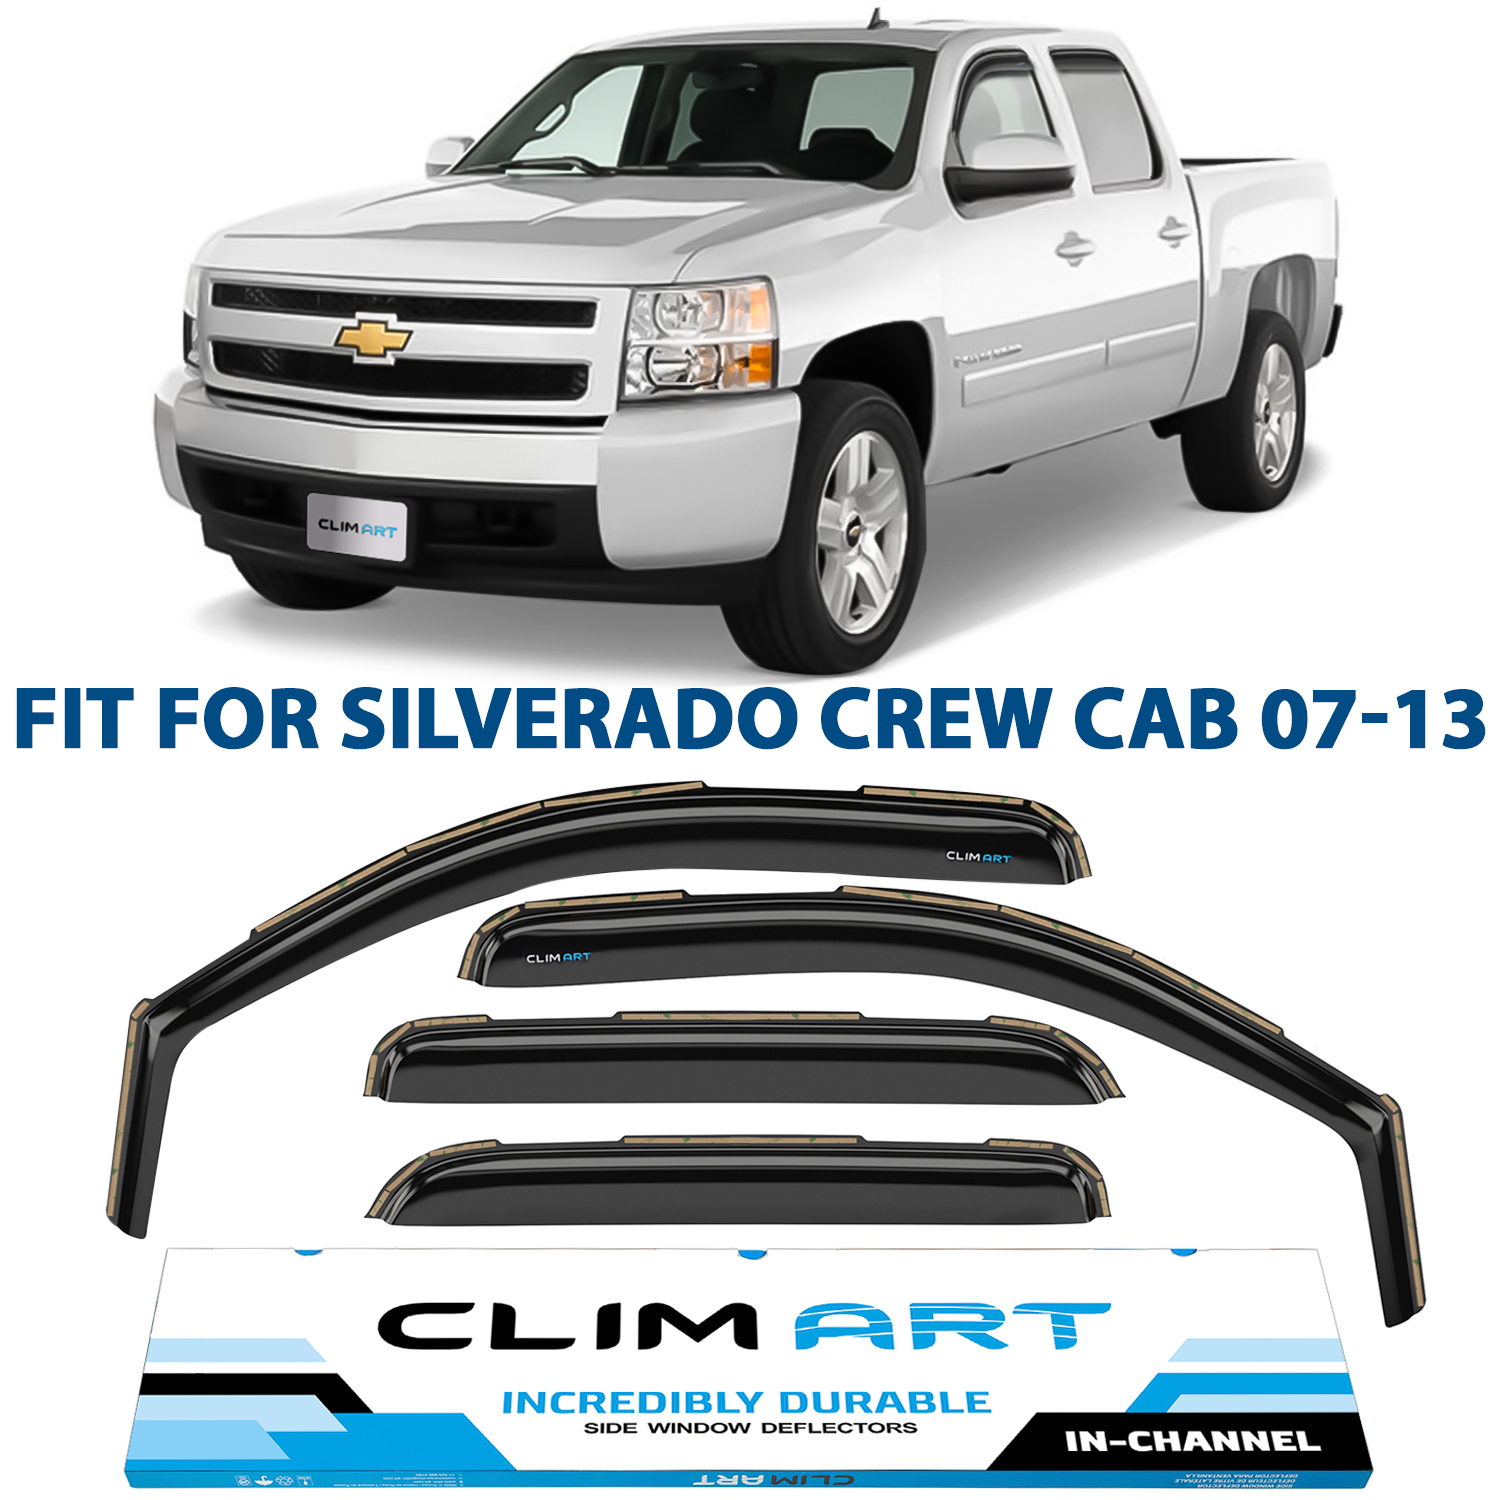 CLIM ART Side Window Deflectors for 2007-2013 Chevrolet Silverado/GMC Sierra Crew Cab